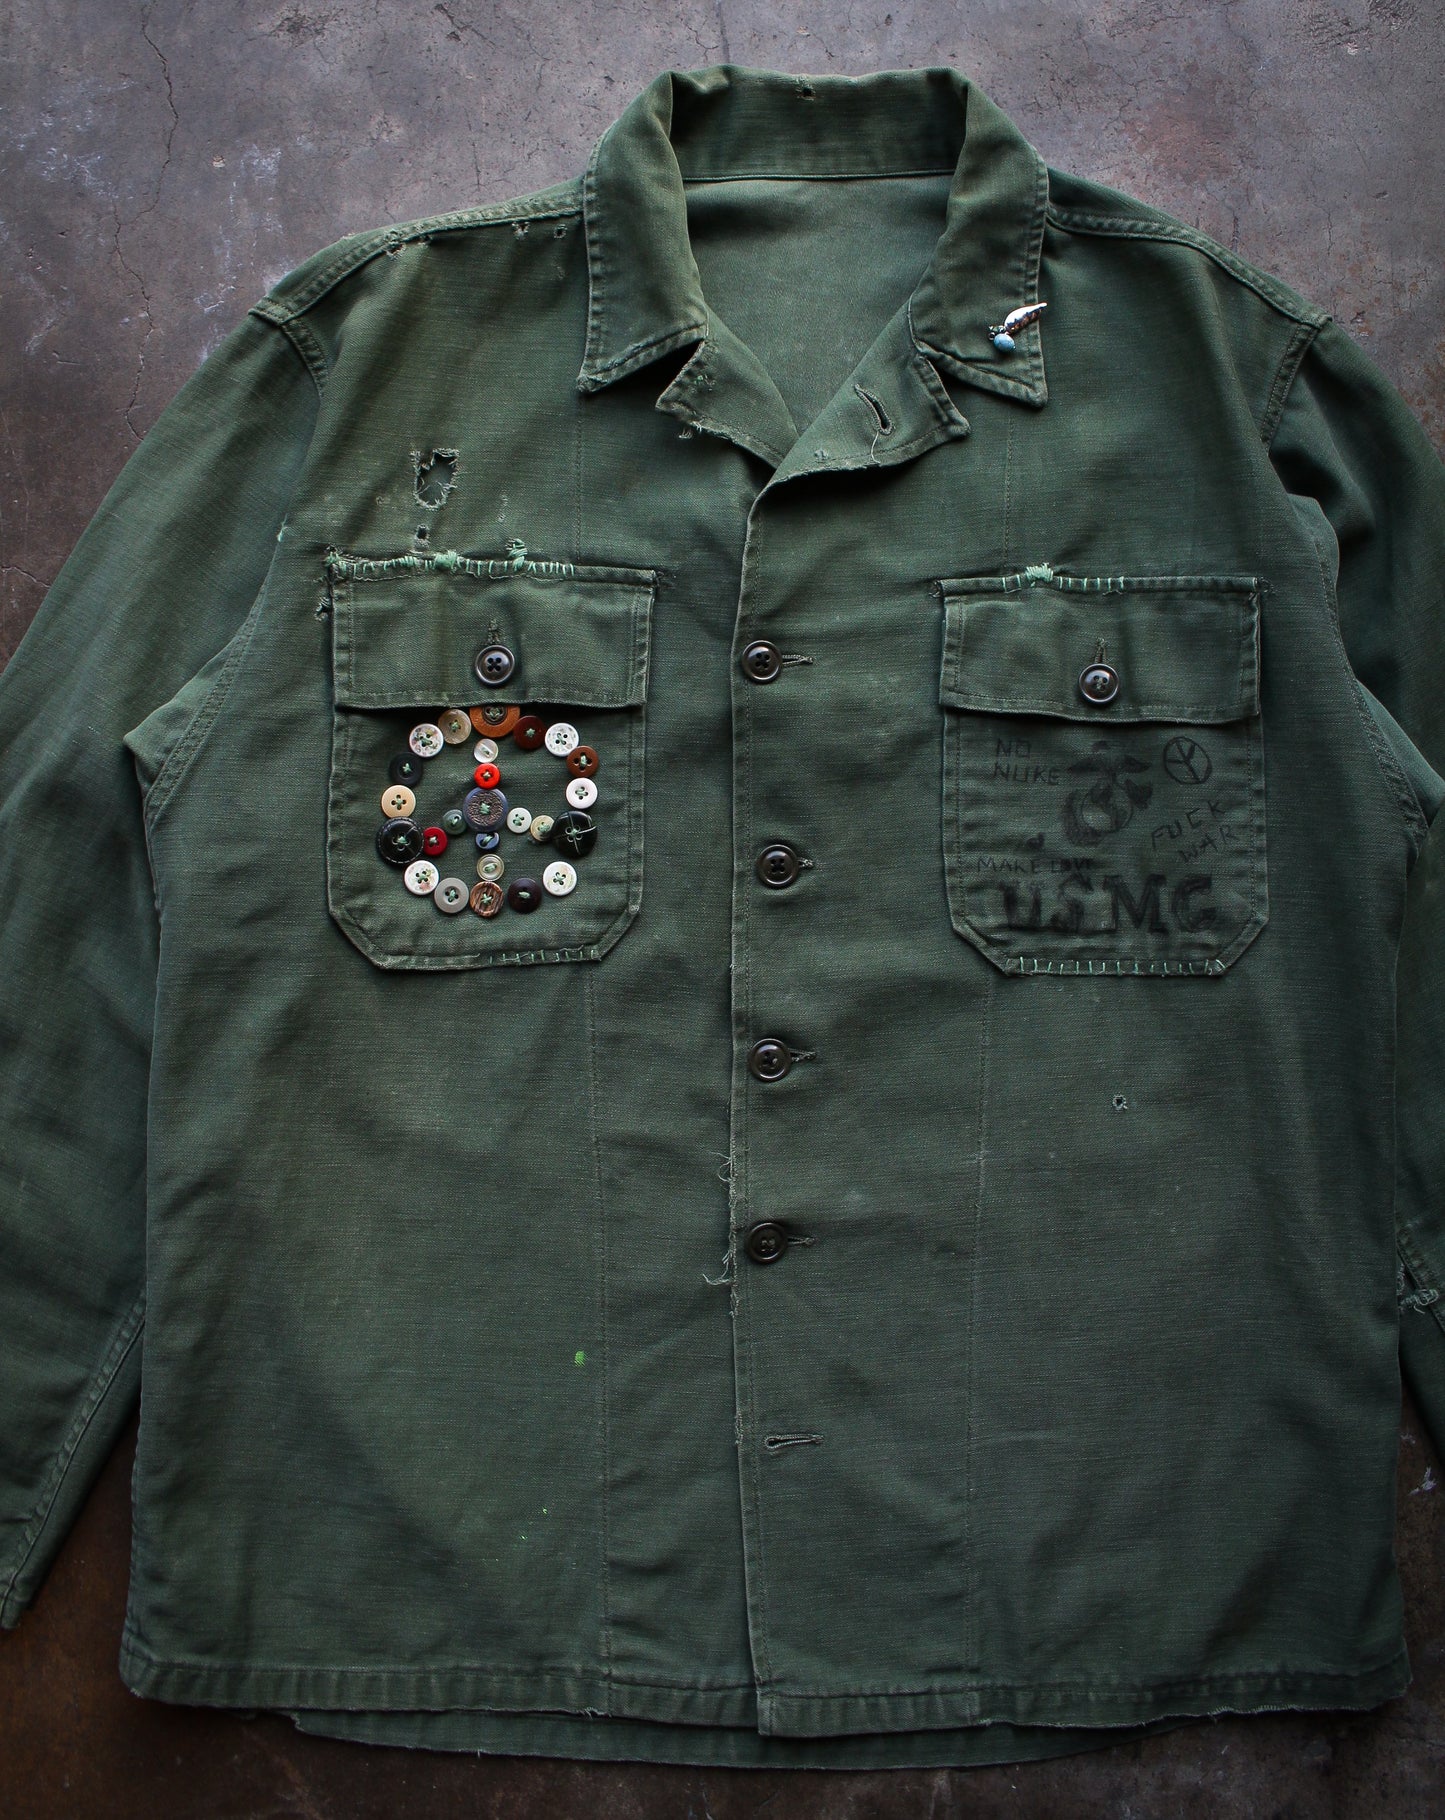 Late 60s Anti-War Customized Military Shirt - Large